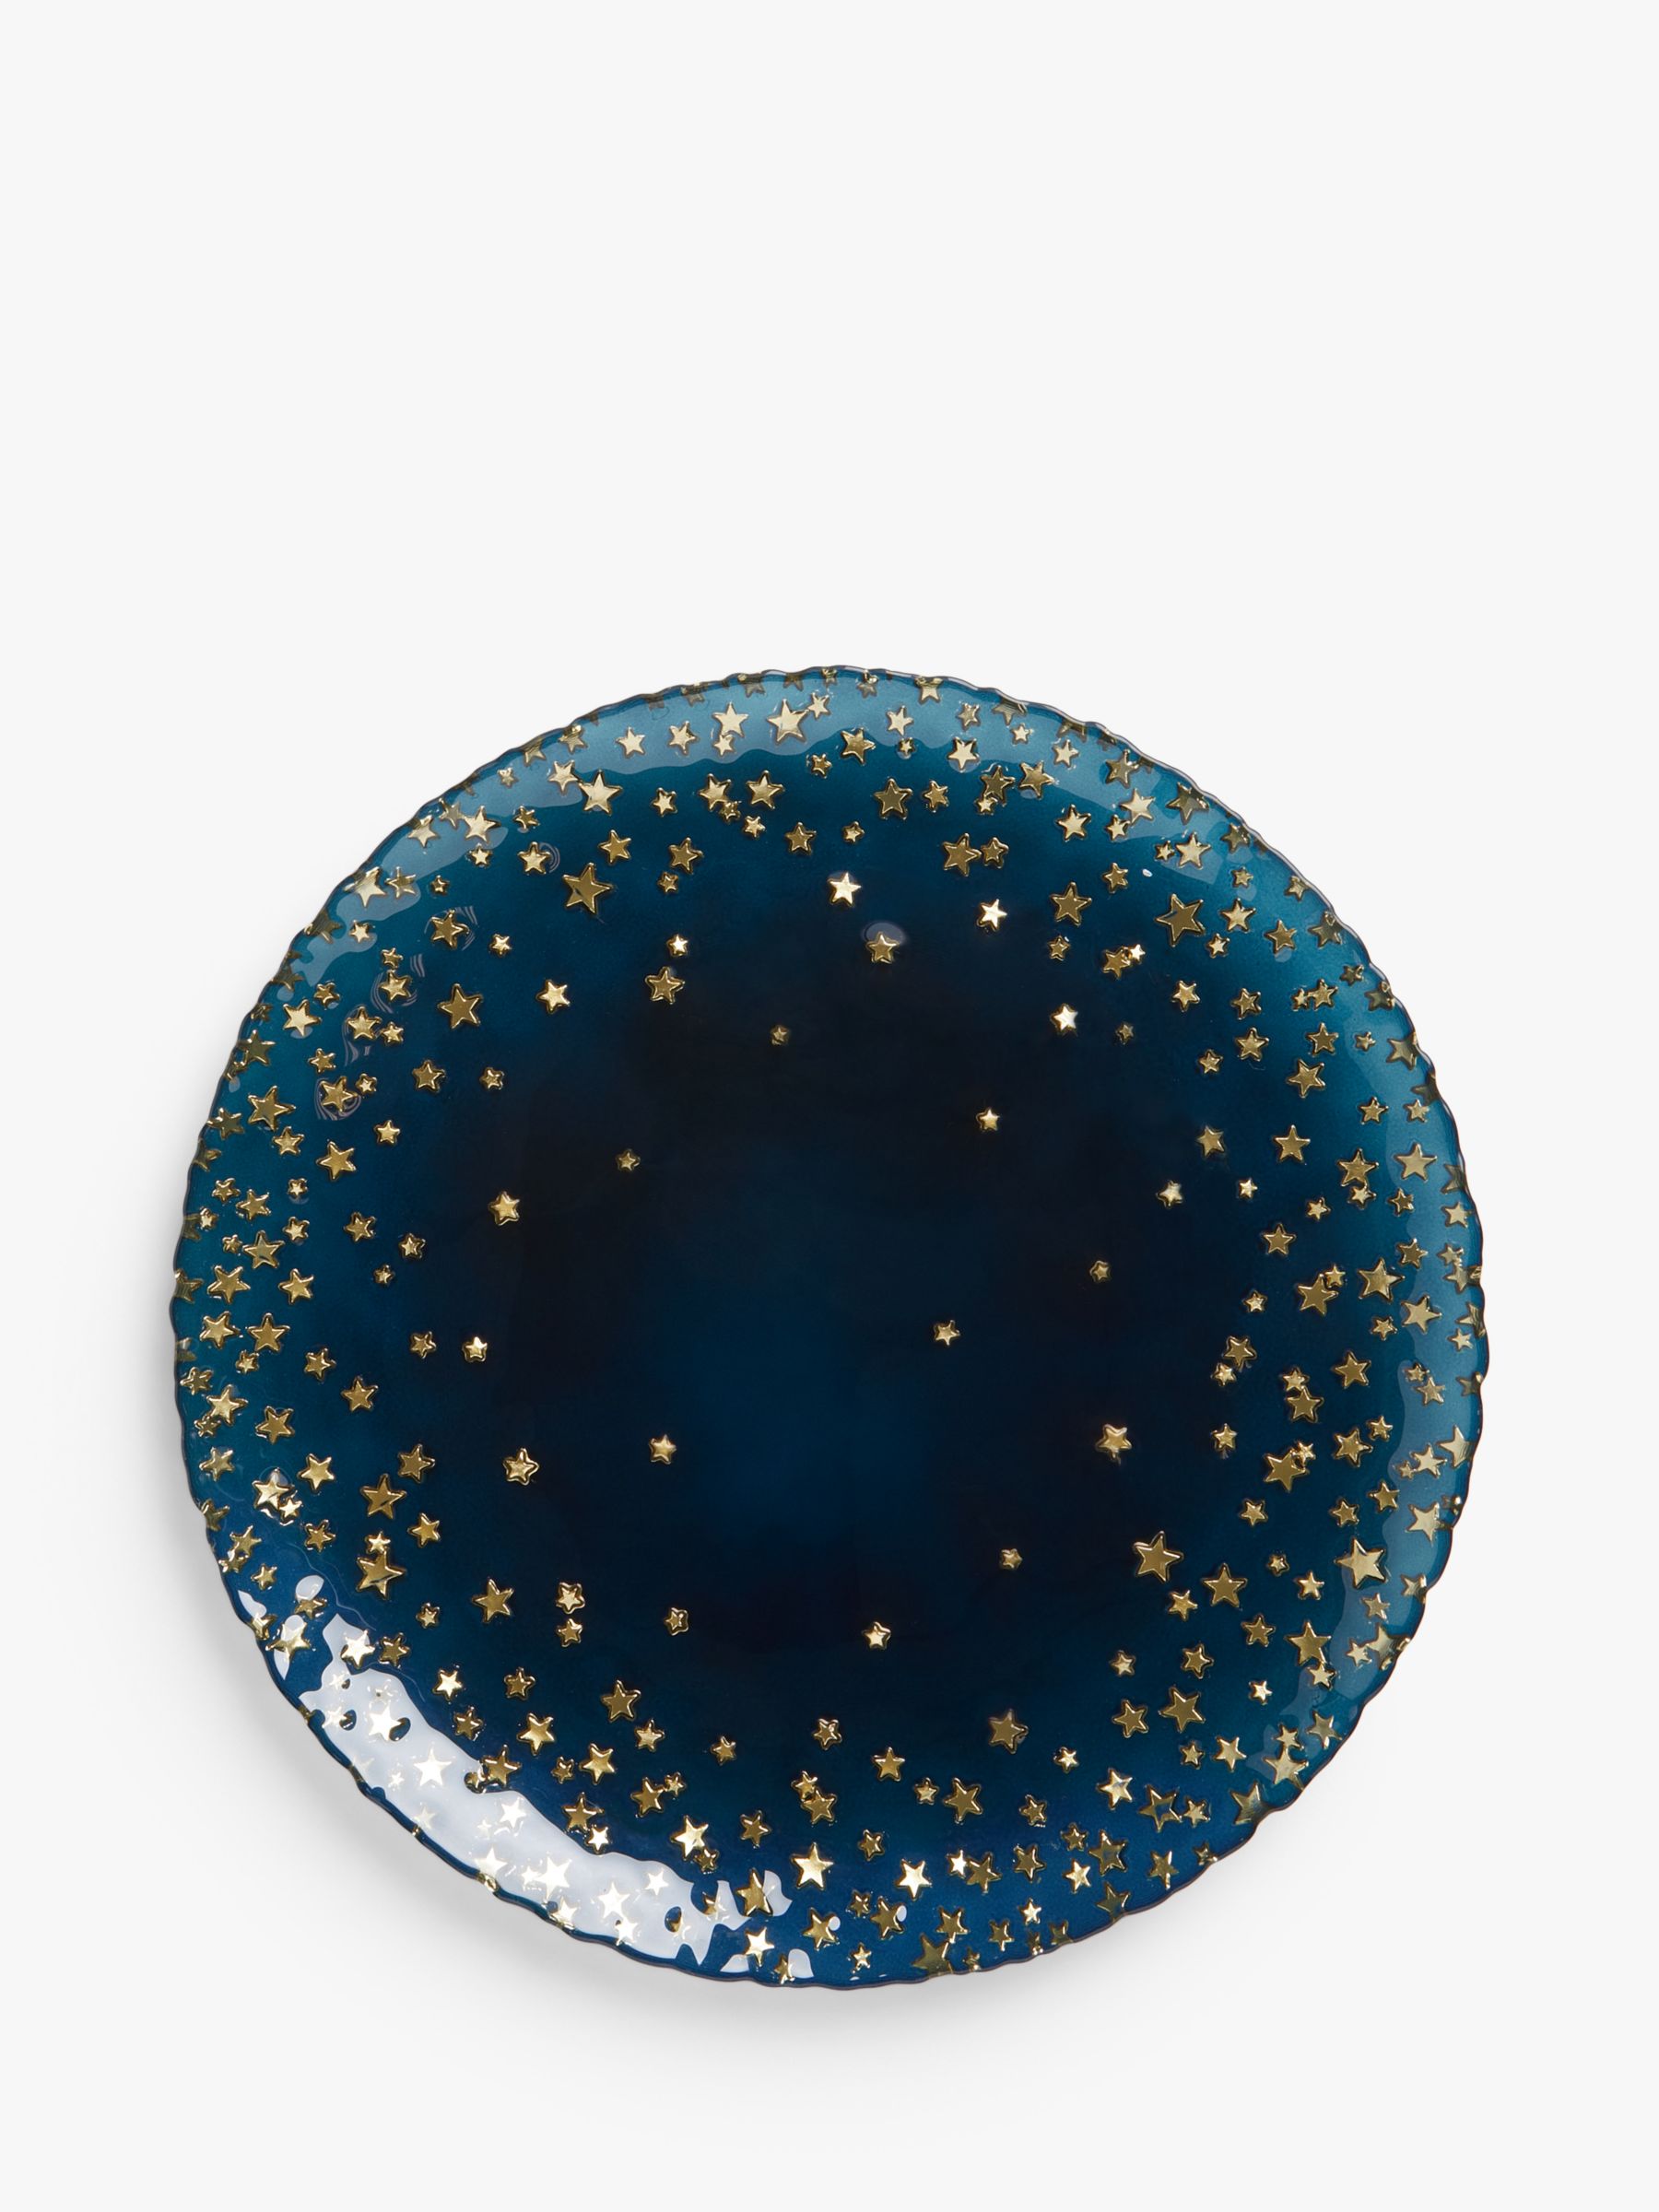 John Lewis Star Round Glass Platter, 32.5cm, Blue/Gold